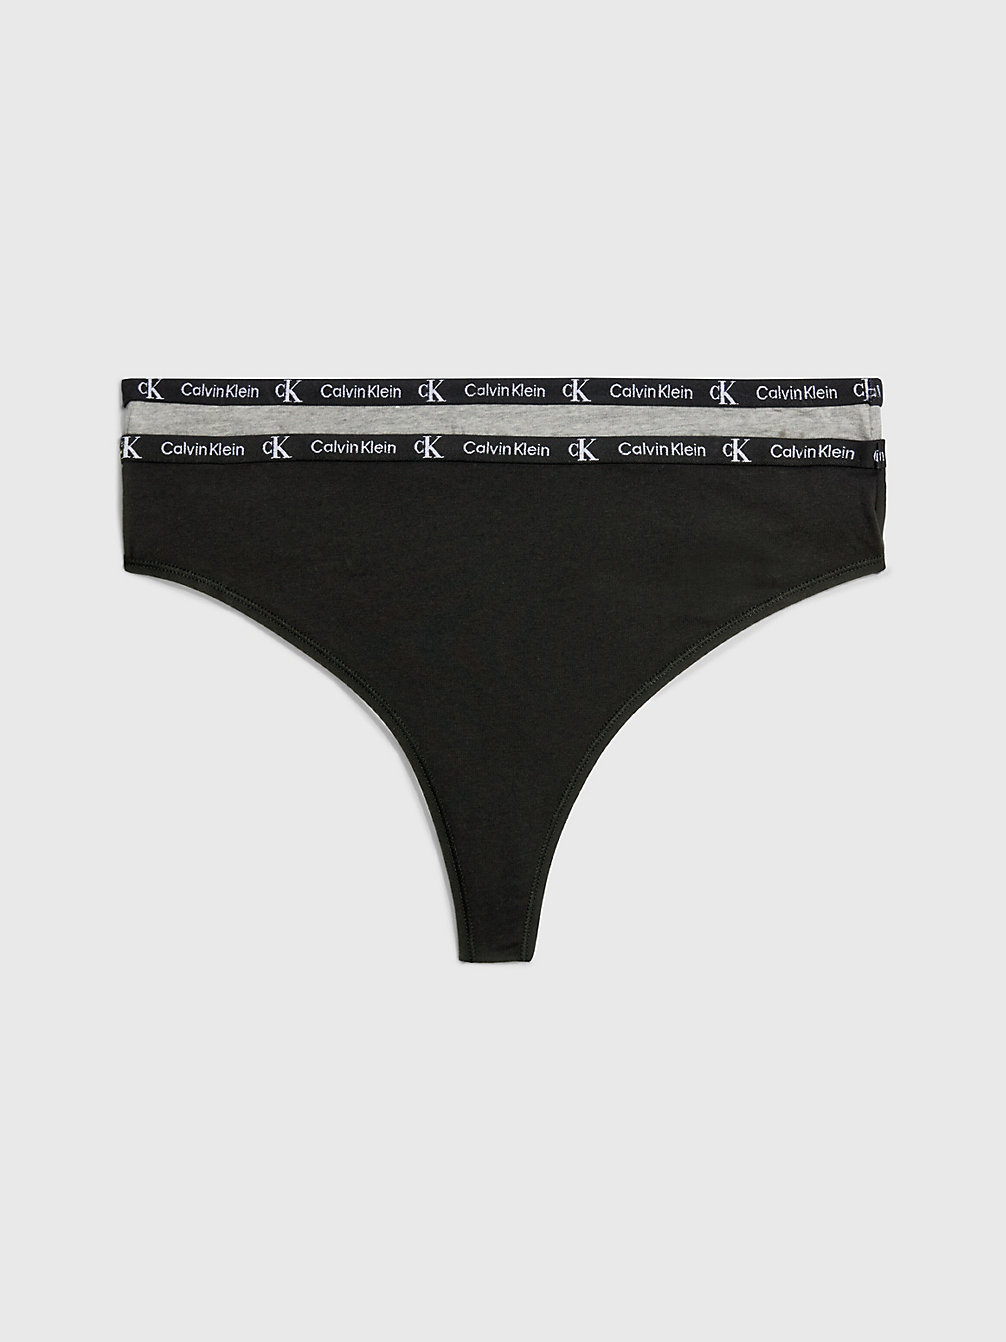 BLACK/GREY HEATHER 2 Pack Thongs - Ck96 undefined women Calvin Klein